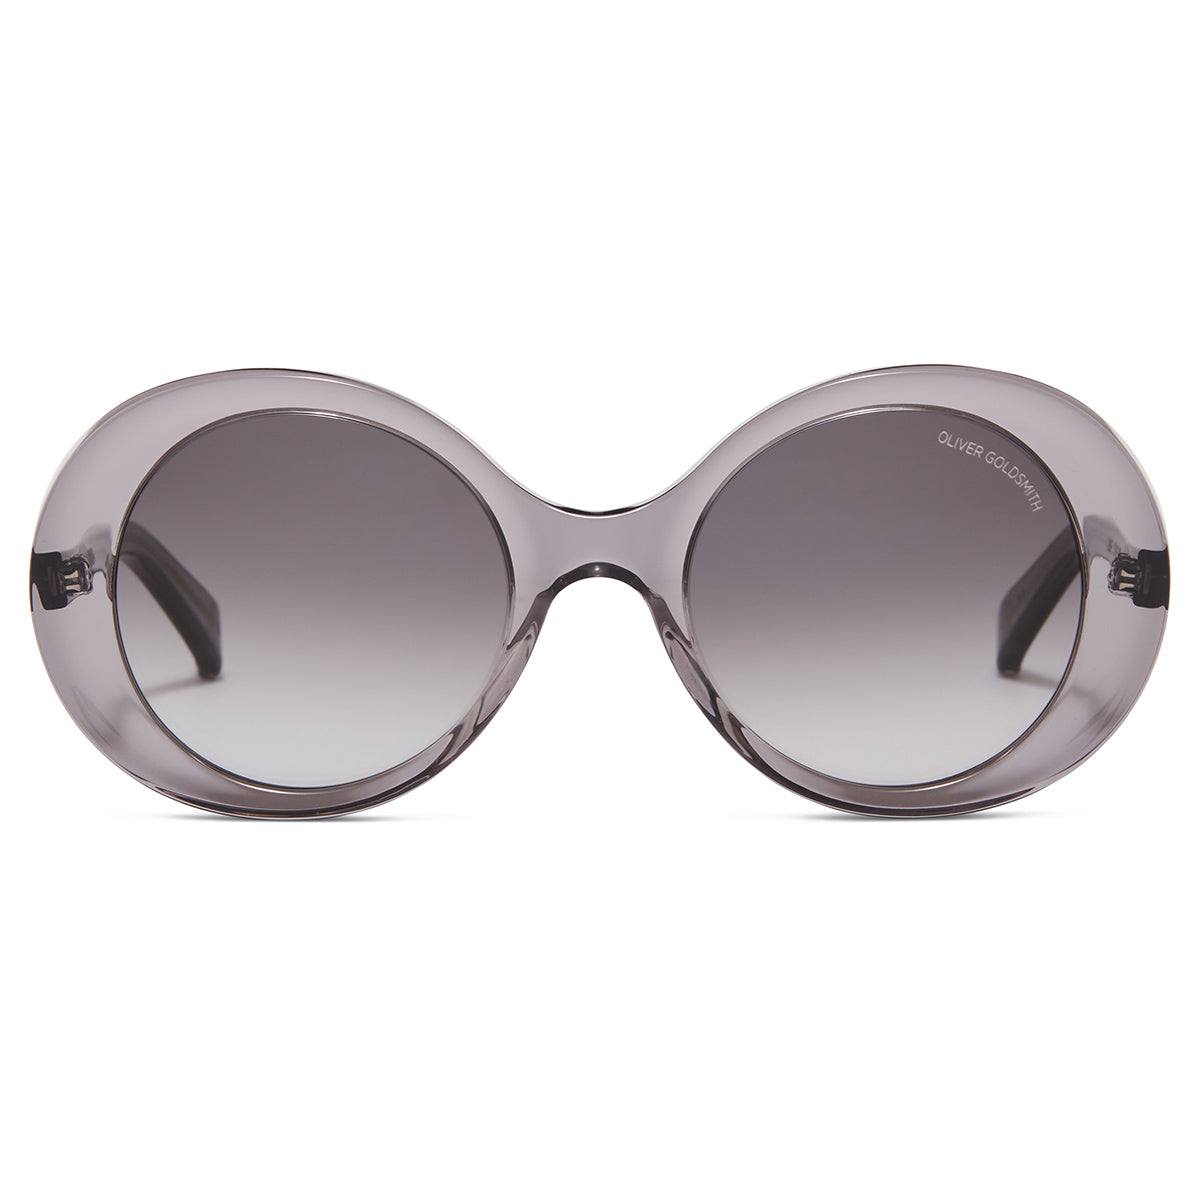 The 1960s Round Sunglasses | Oliver Goldsmith